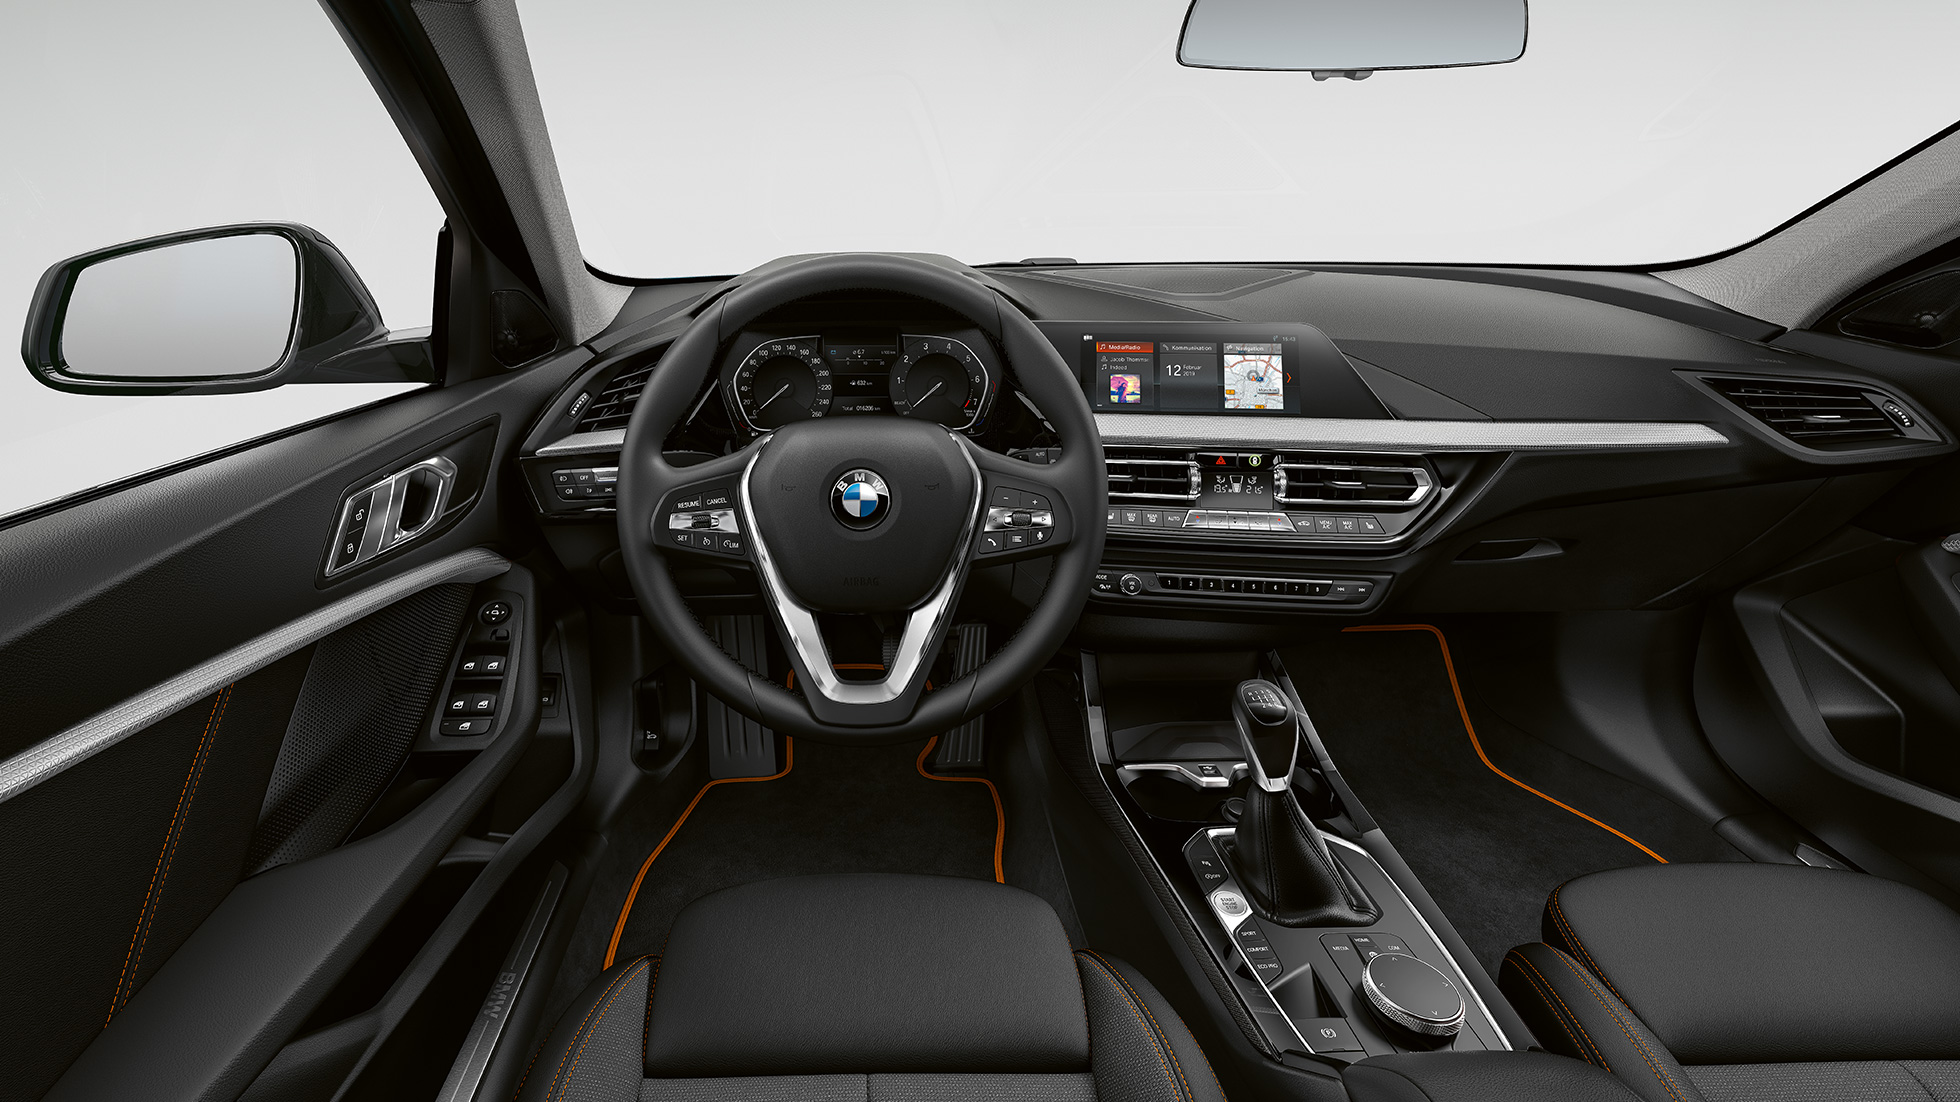 BMW 118i interior - Cockpit